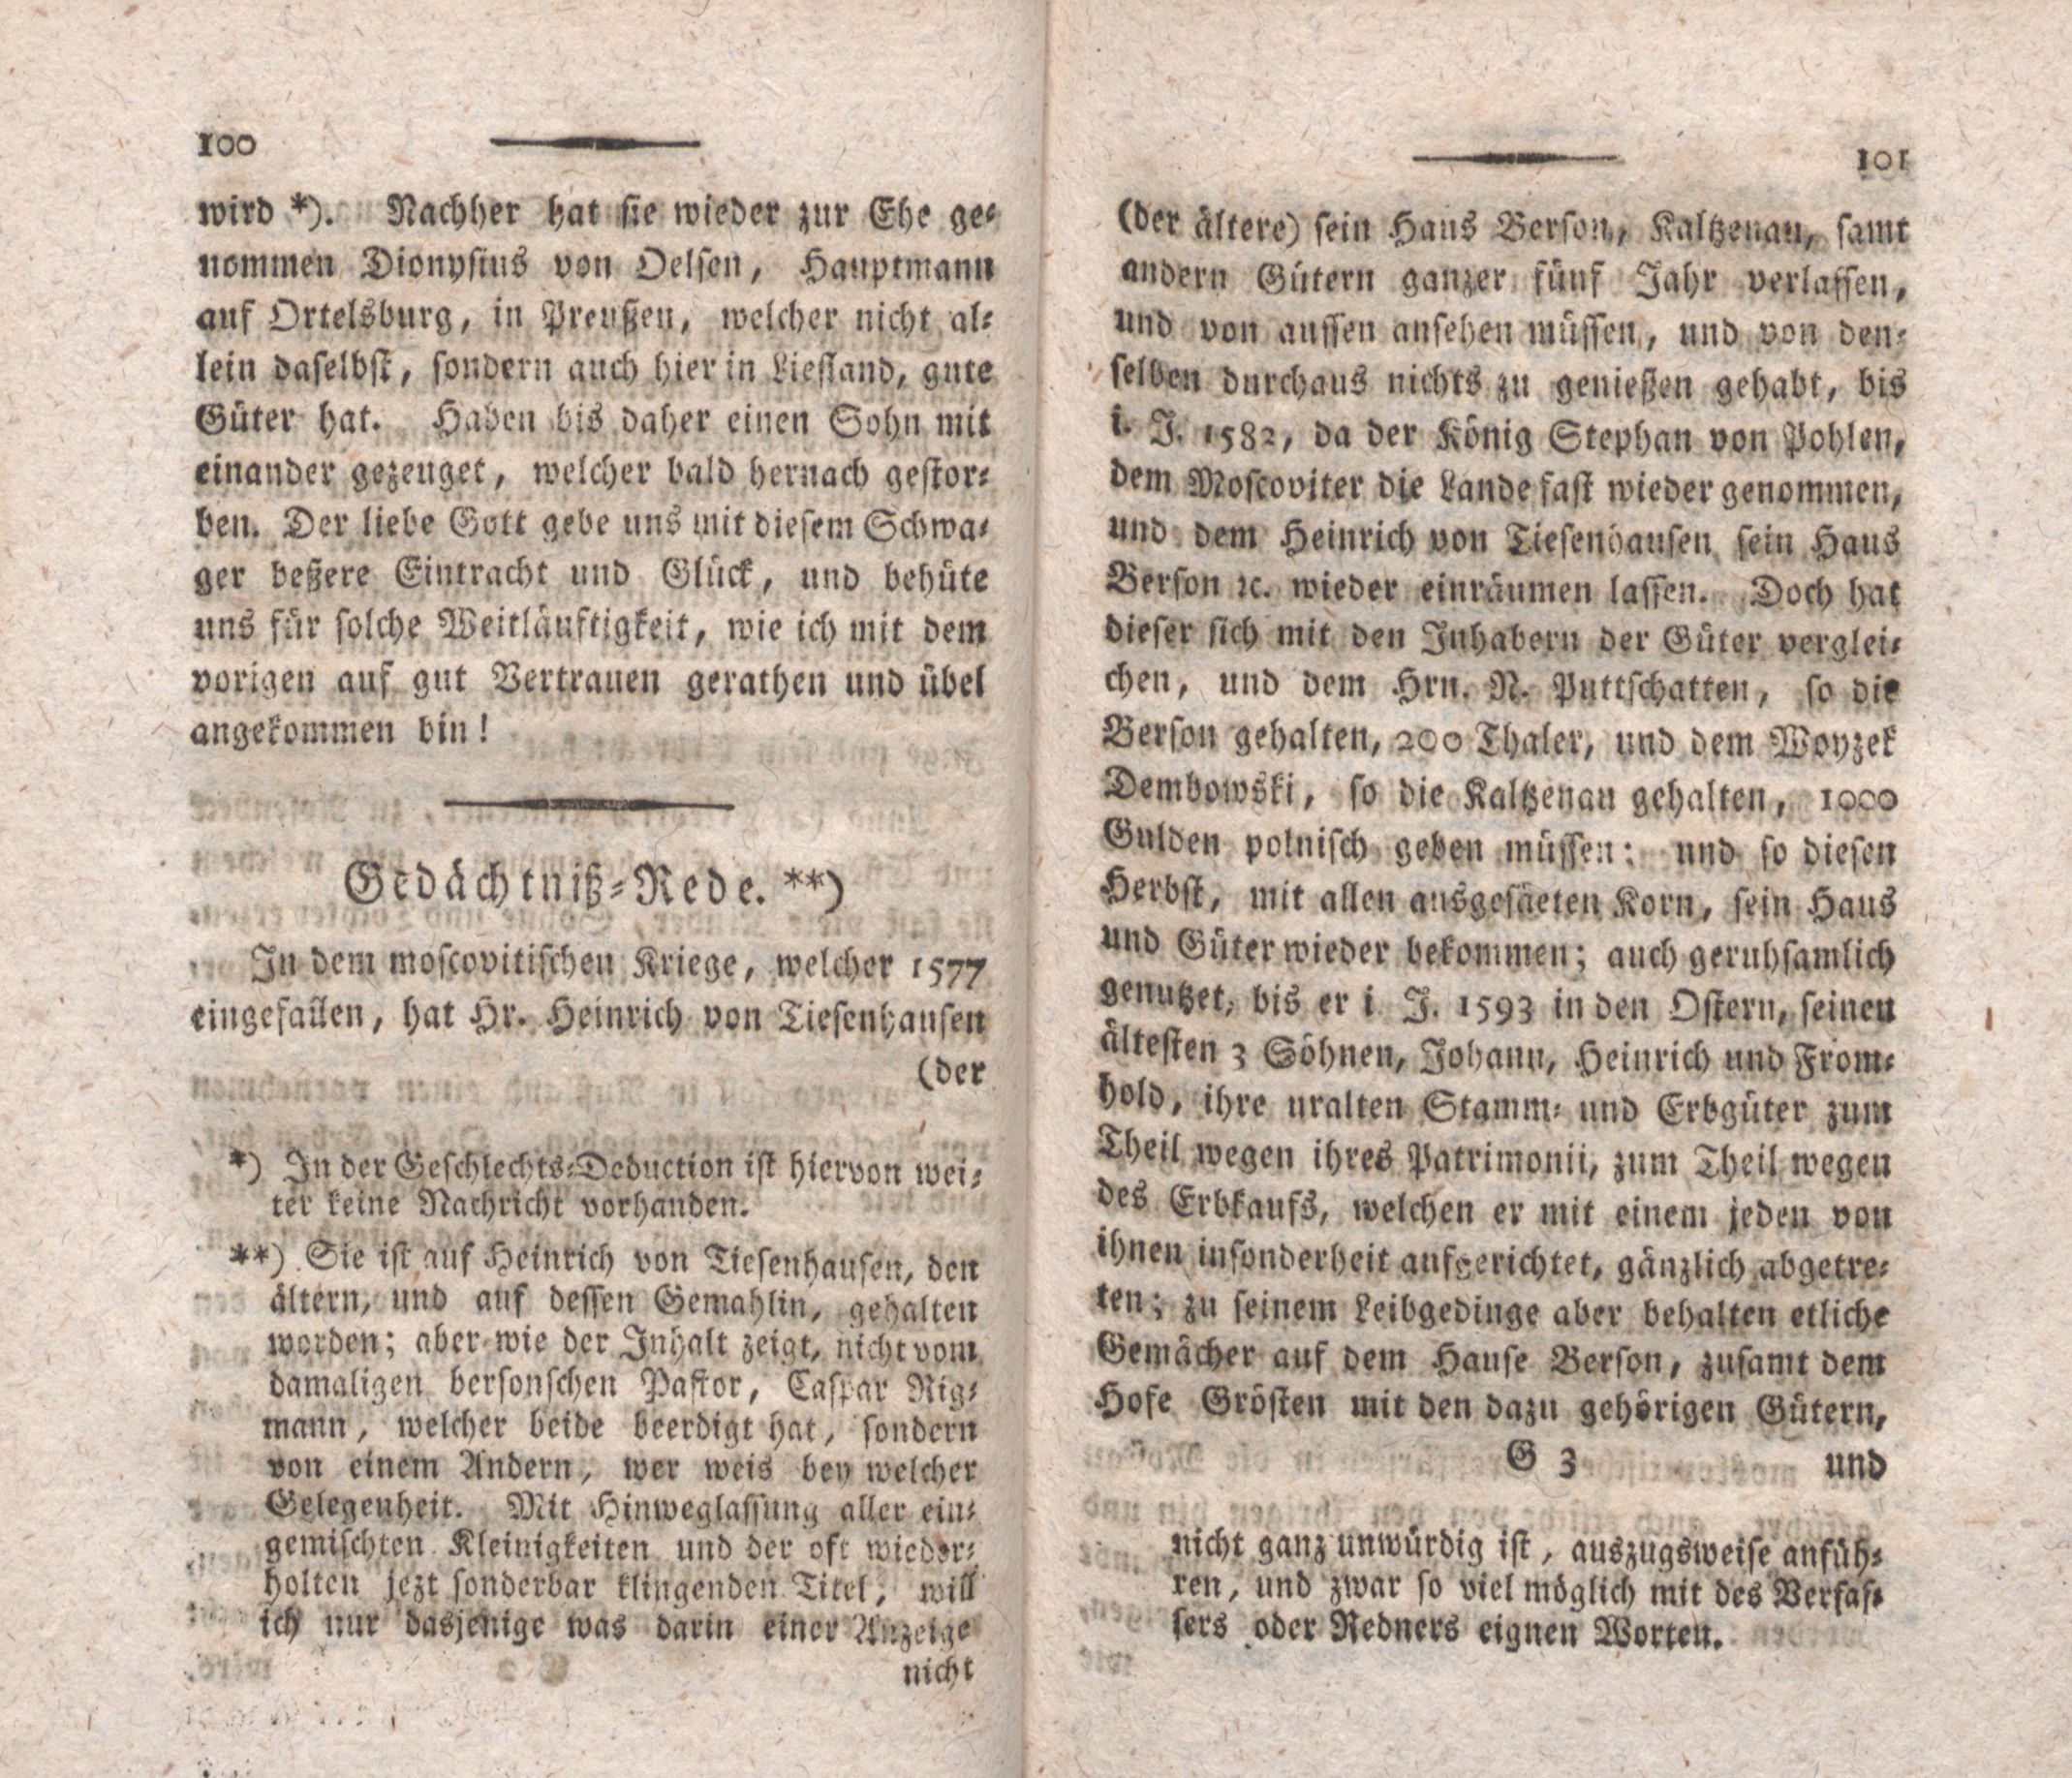 Neue nordische Miscellaneen [18] (1798) | 52. (100-101) Main body of text